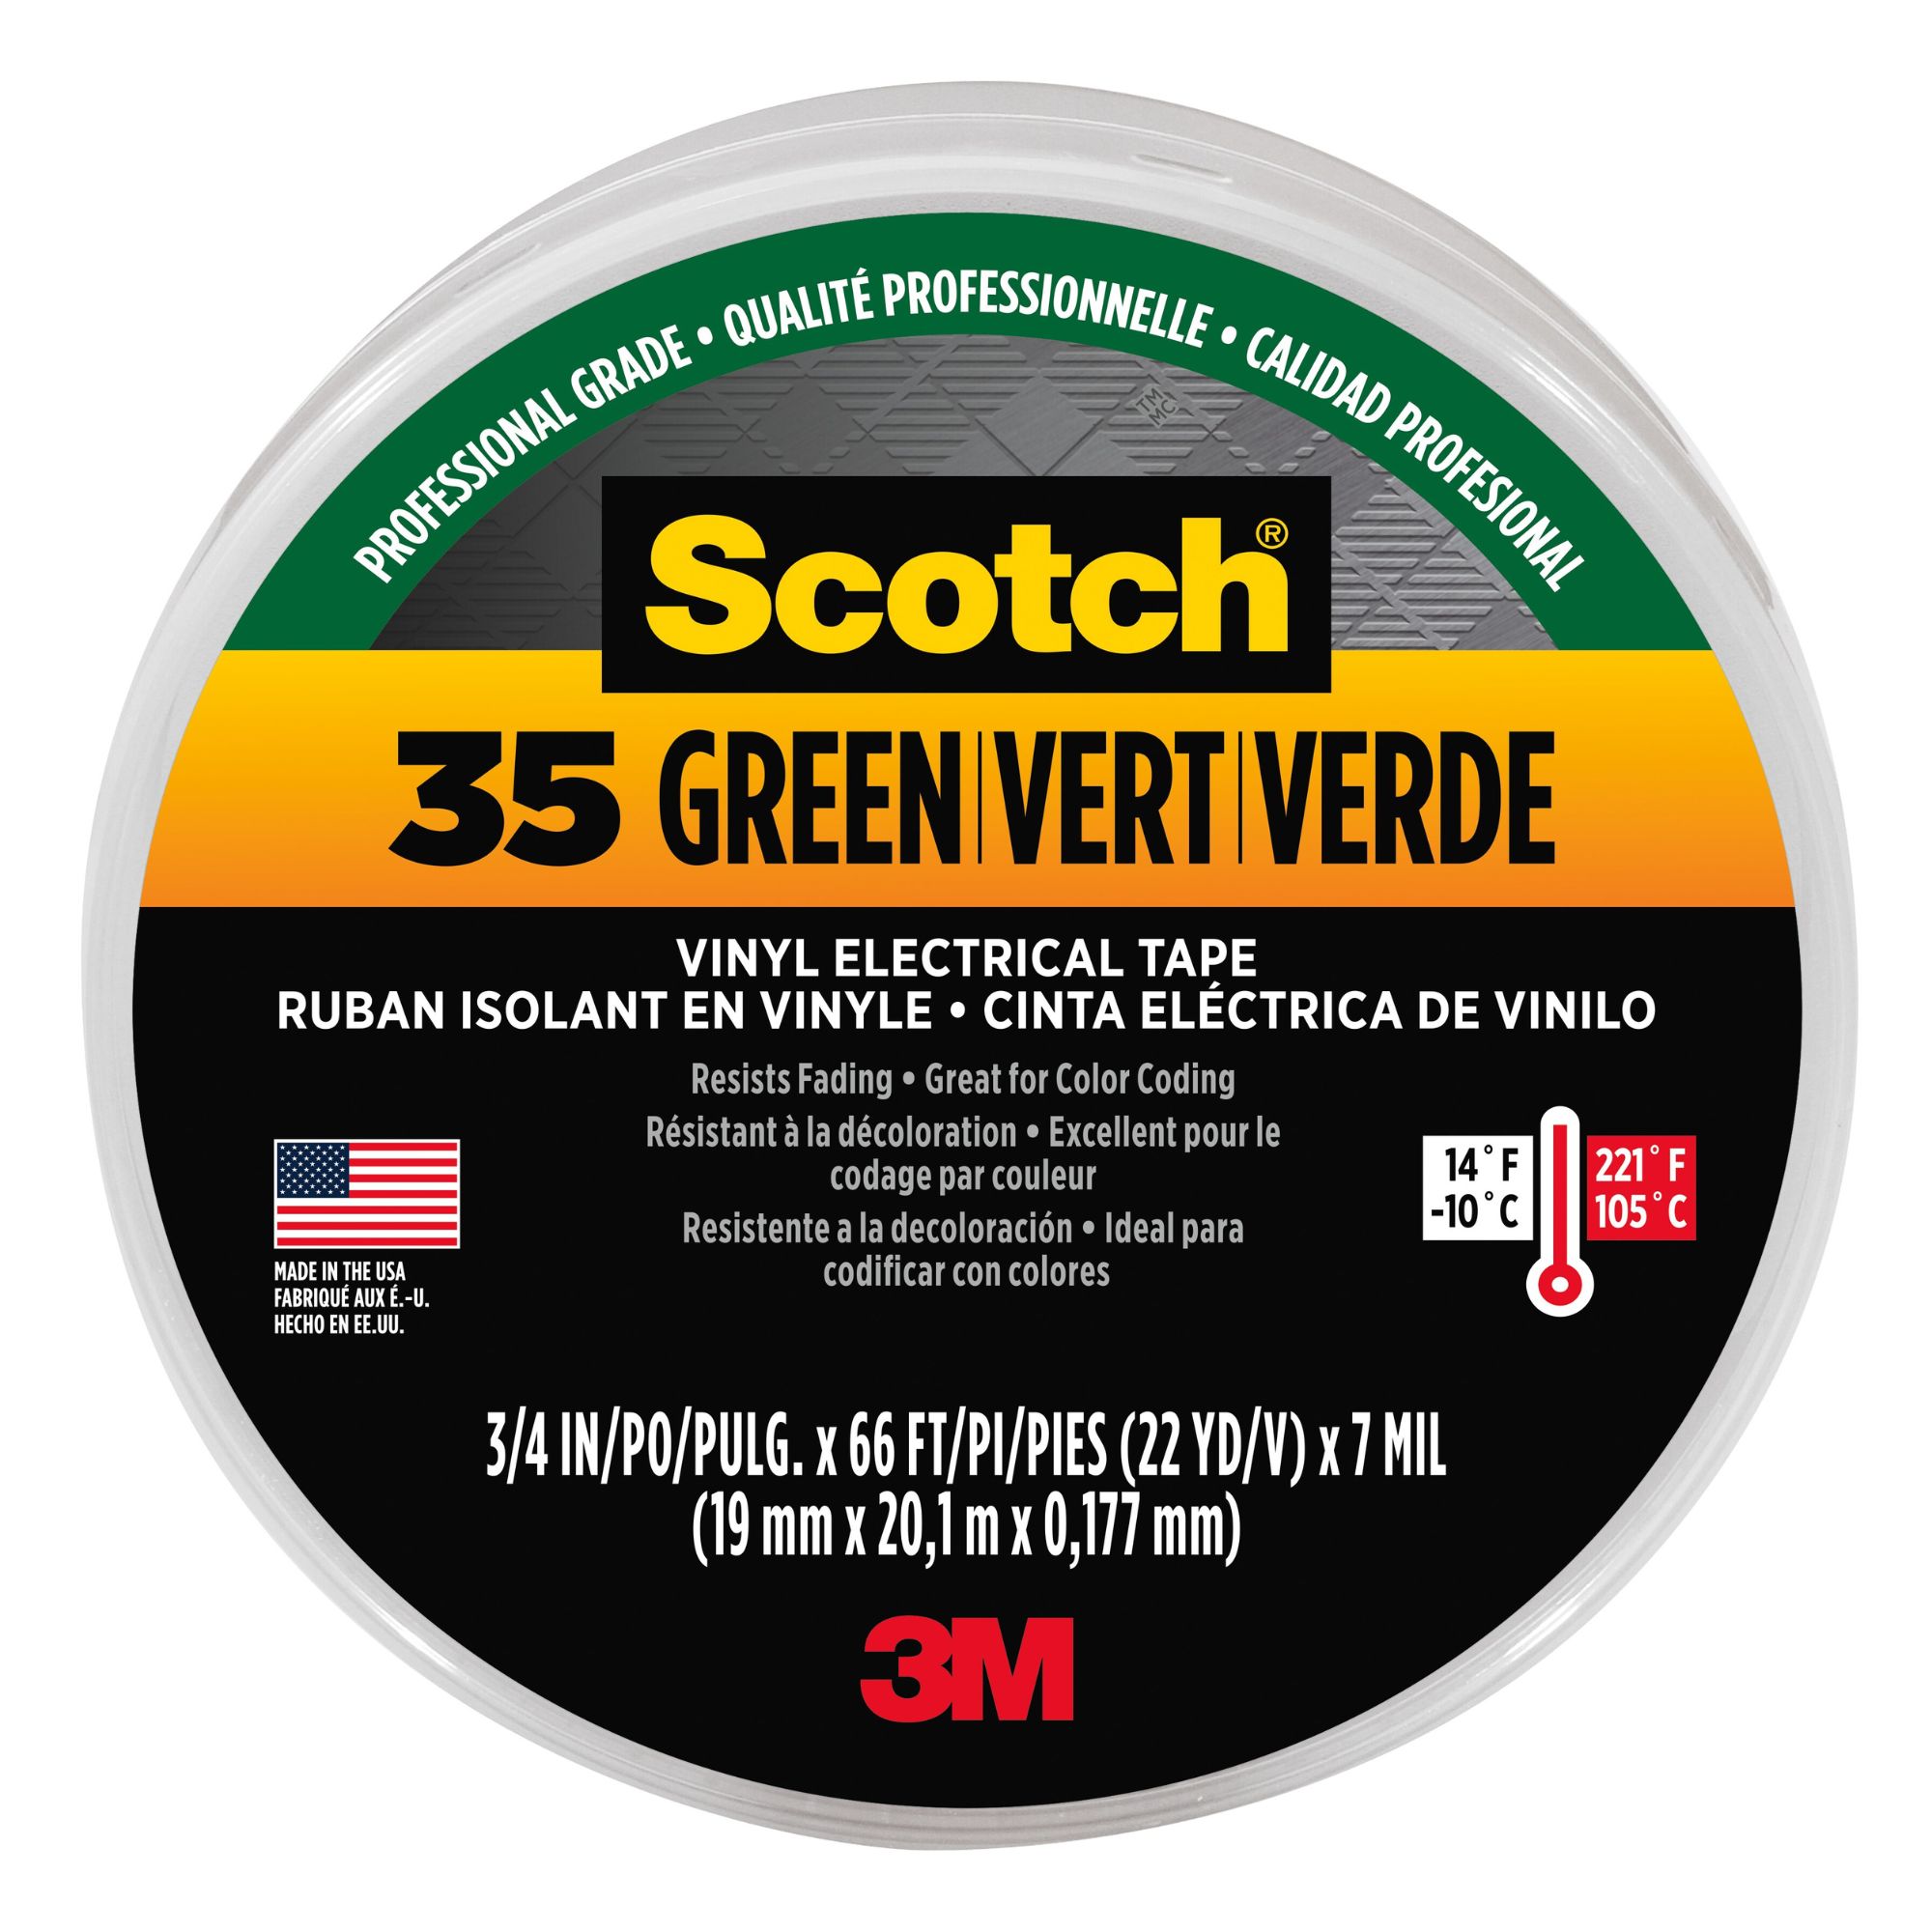 Scotch Color Coding Vinyl Electrical Tape (35)